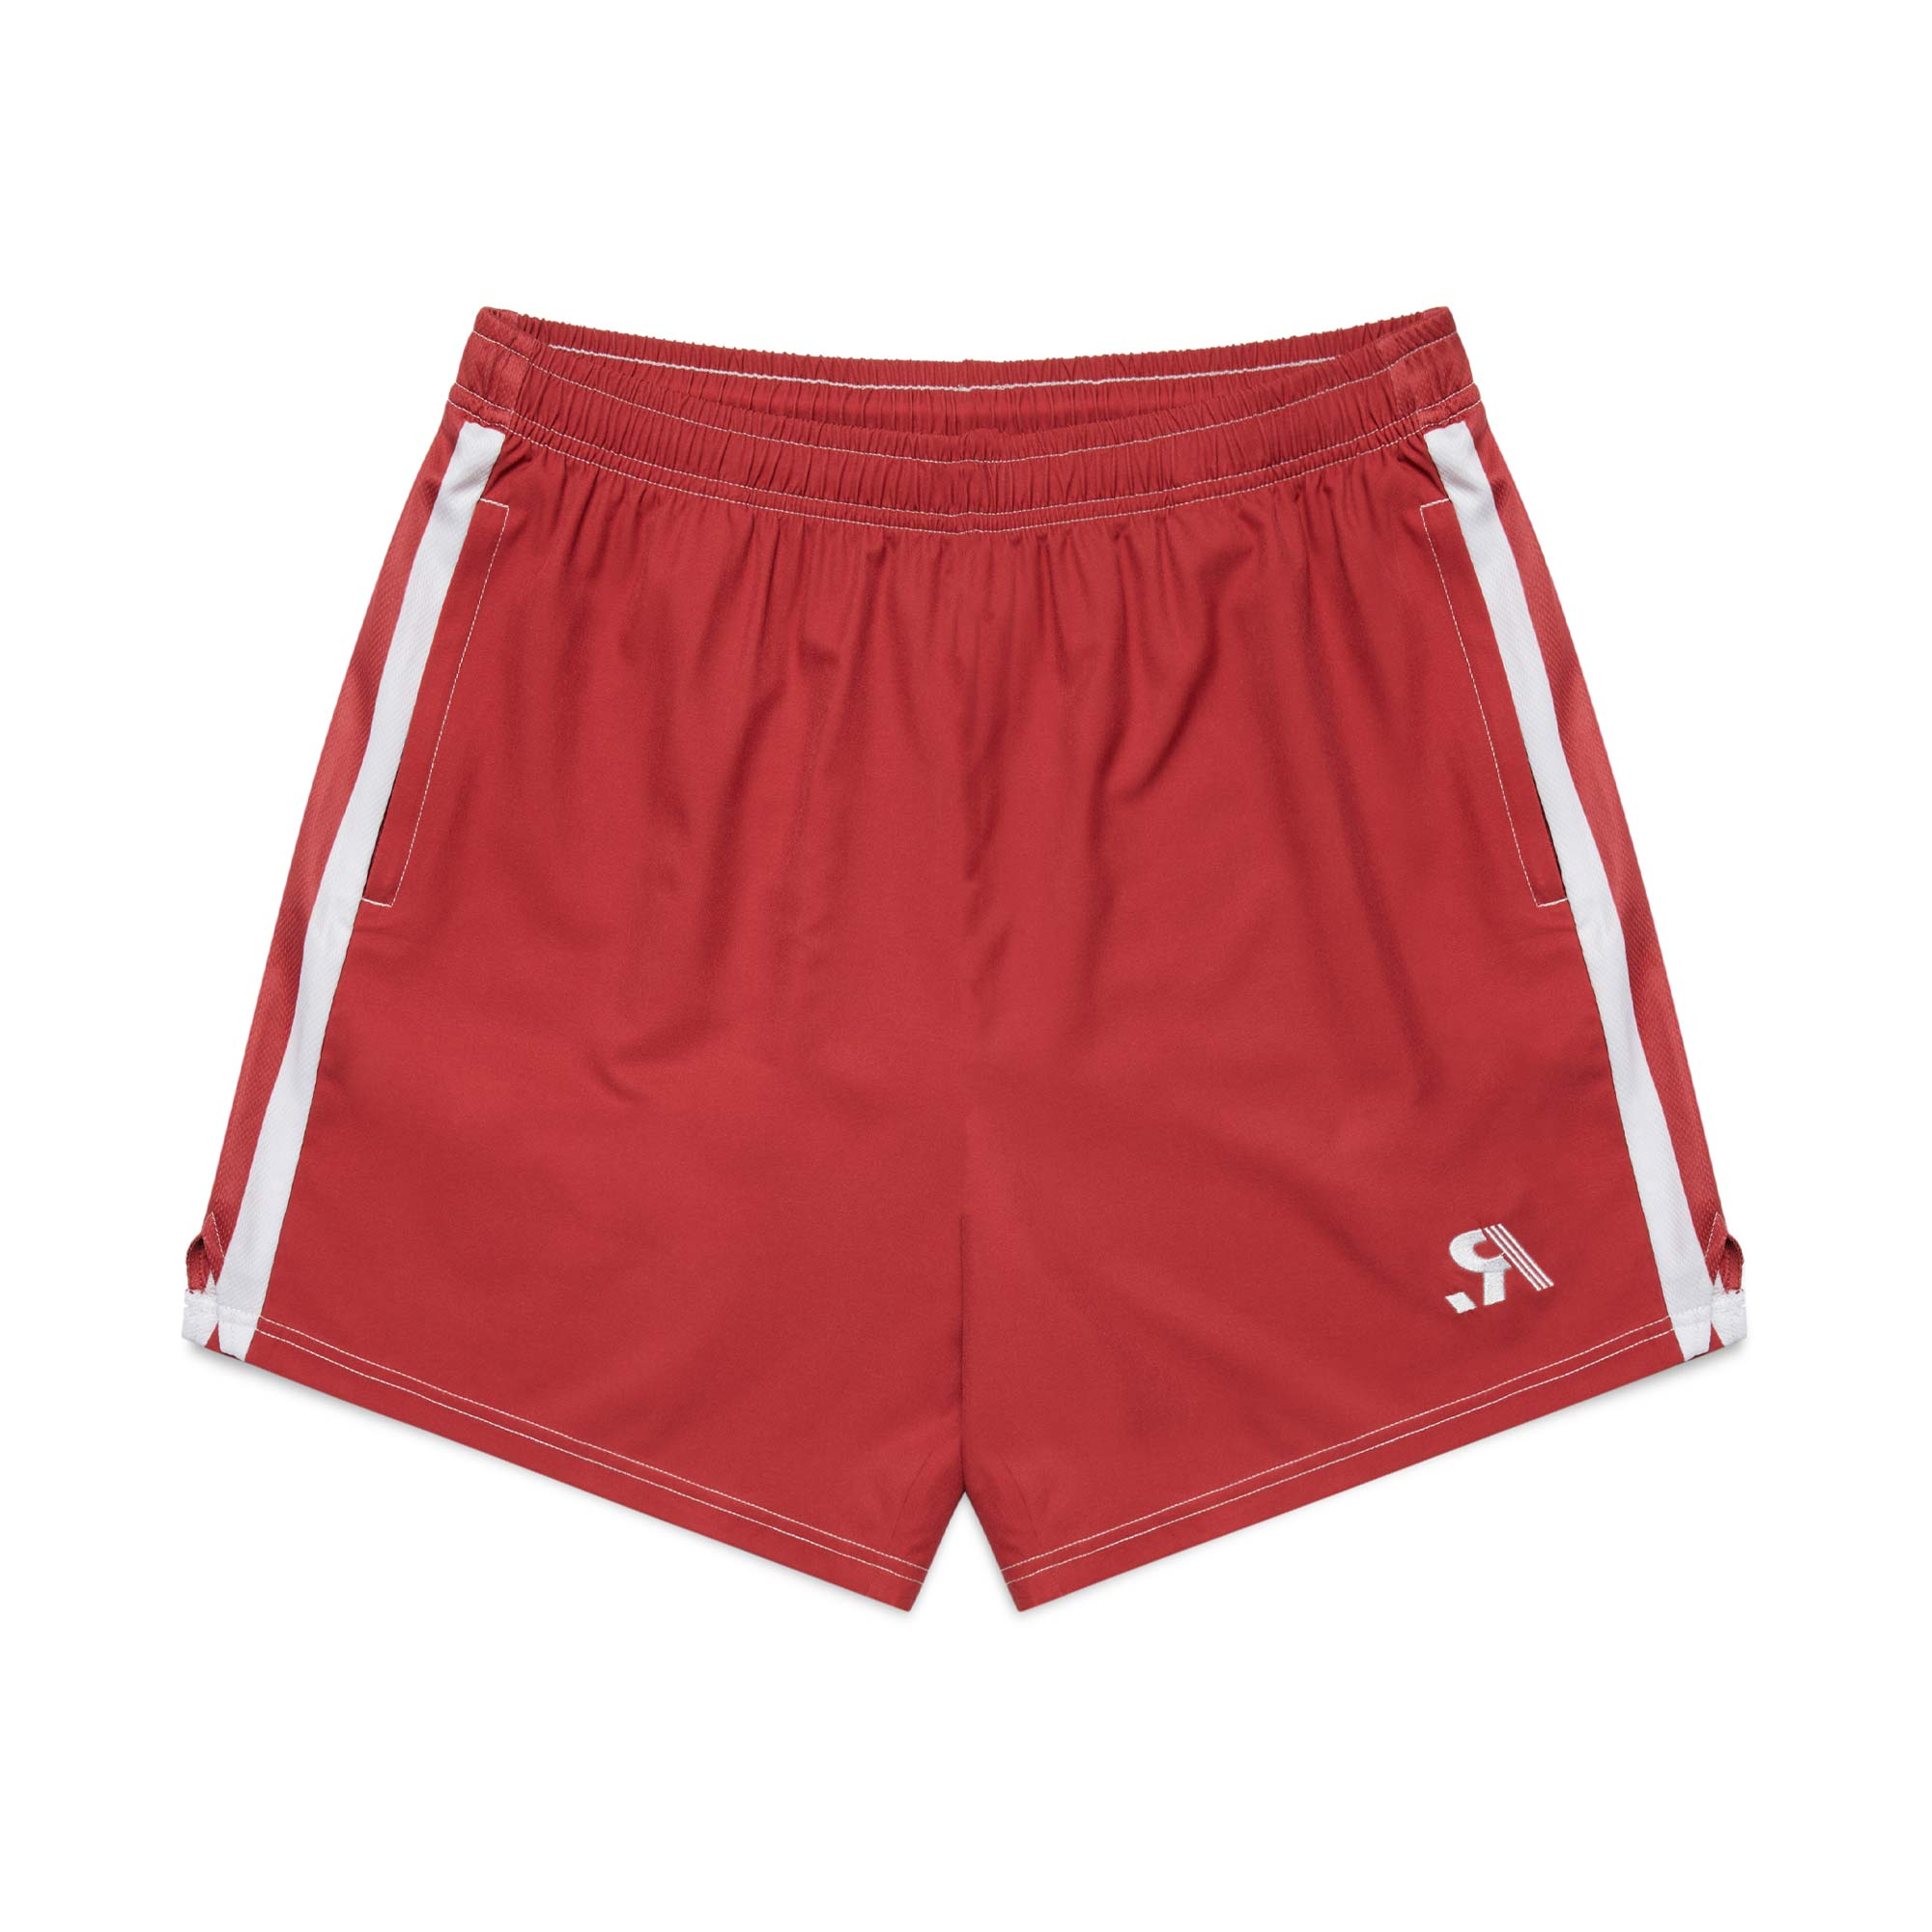 R.SPORT Tennis Shorts - Red/White